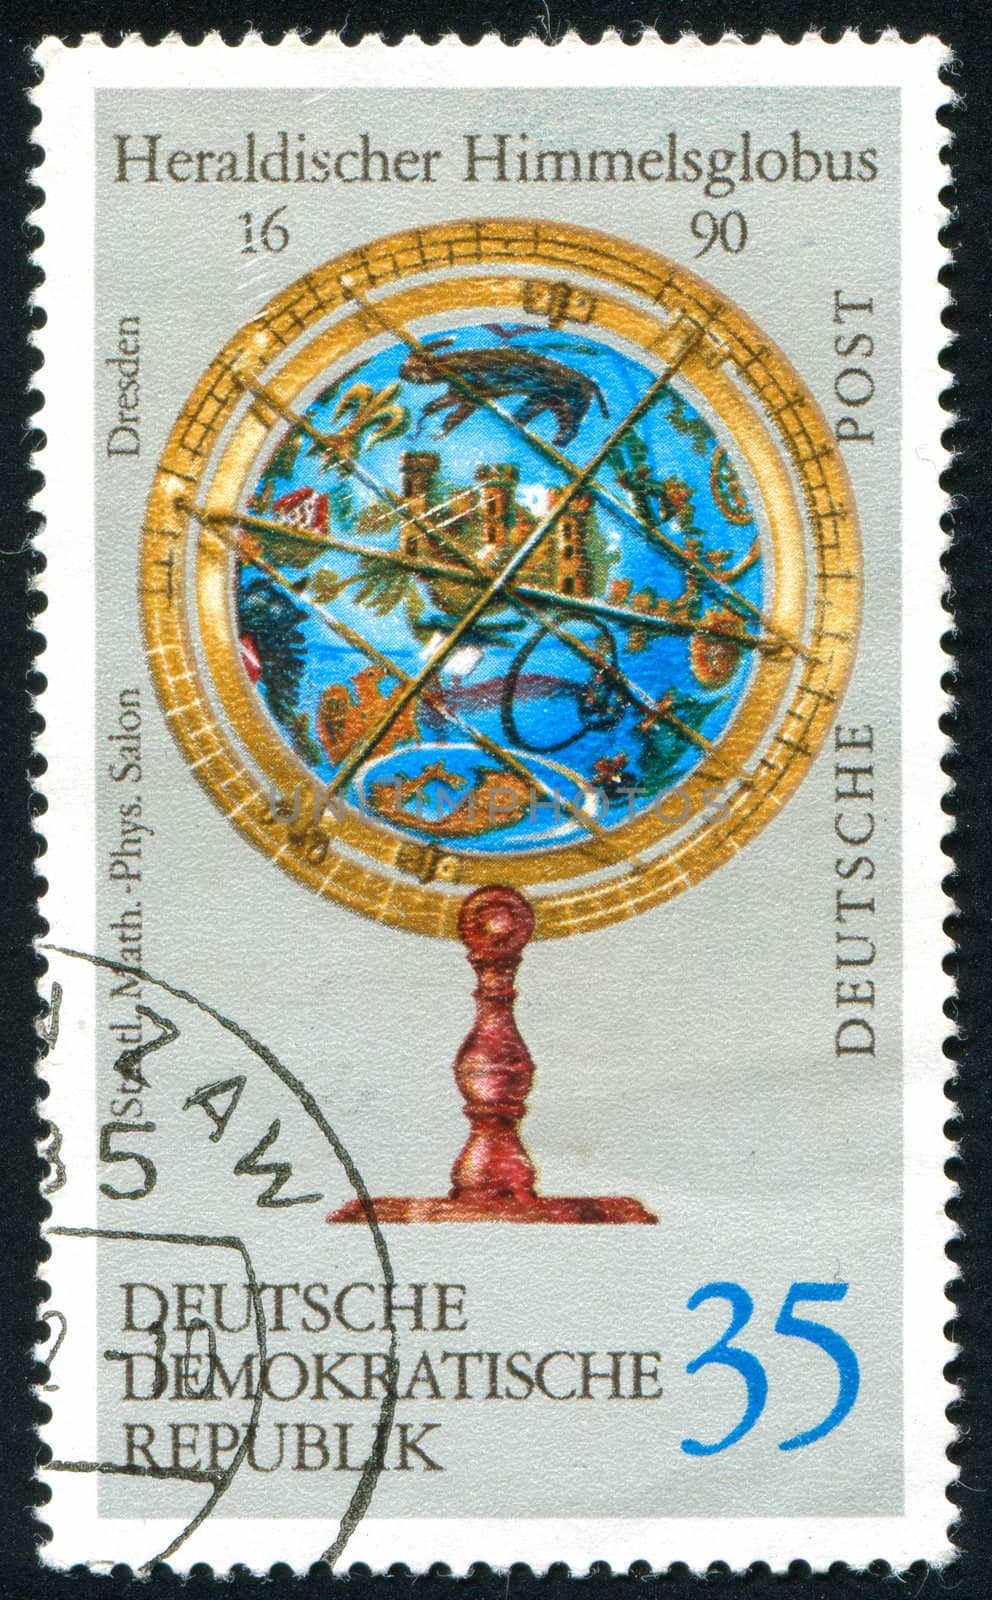 GERMANY- CIRCA 1971: stamp printed by Germany, shows Globe clock, circa 1971.